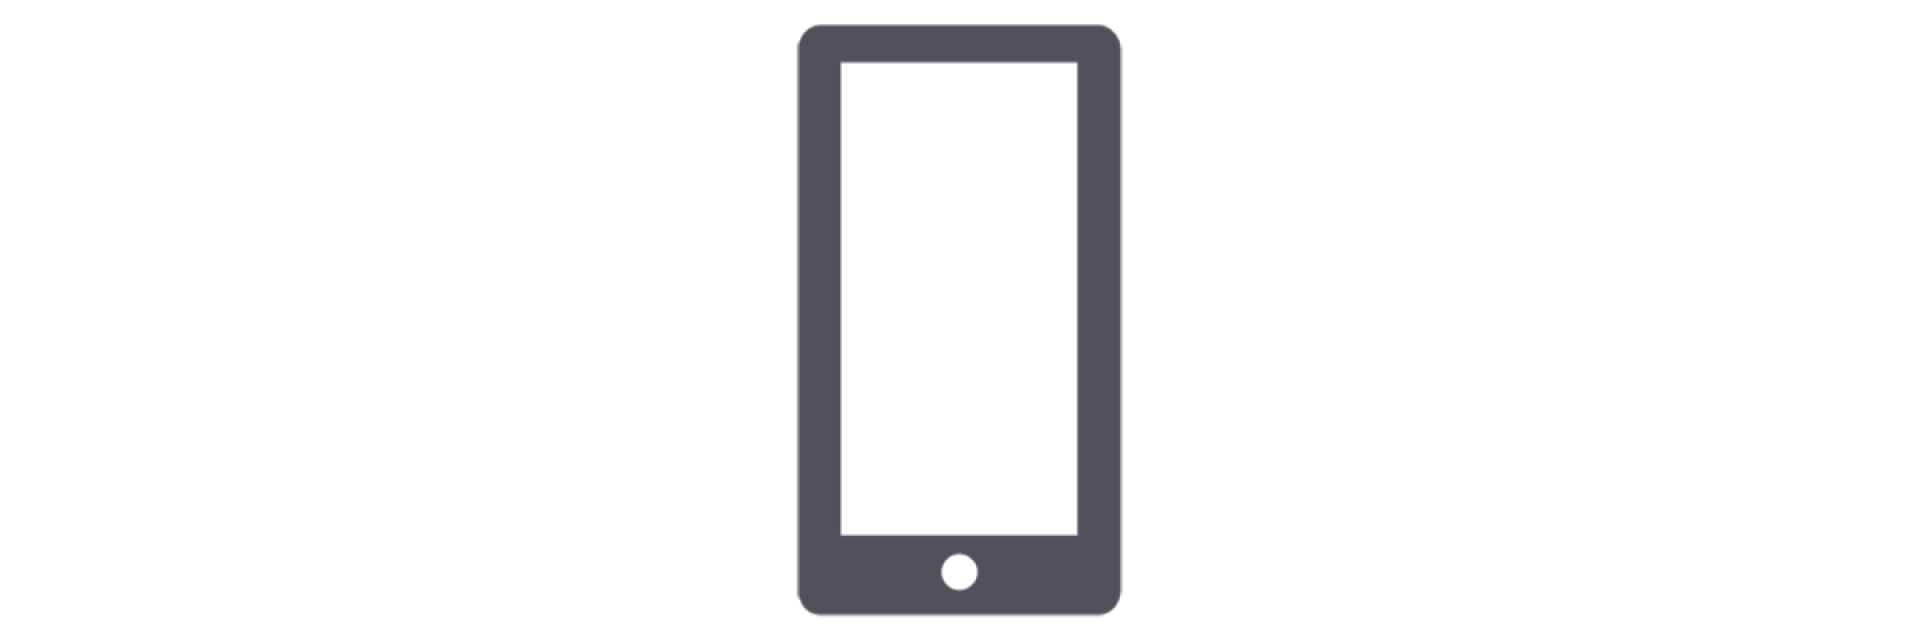 illustration d'un smartphone